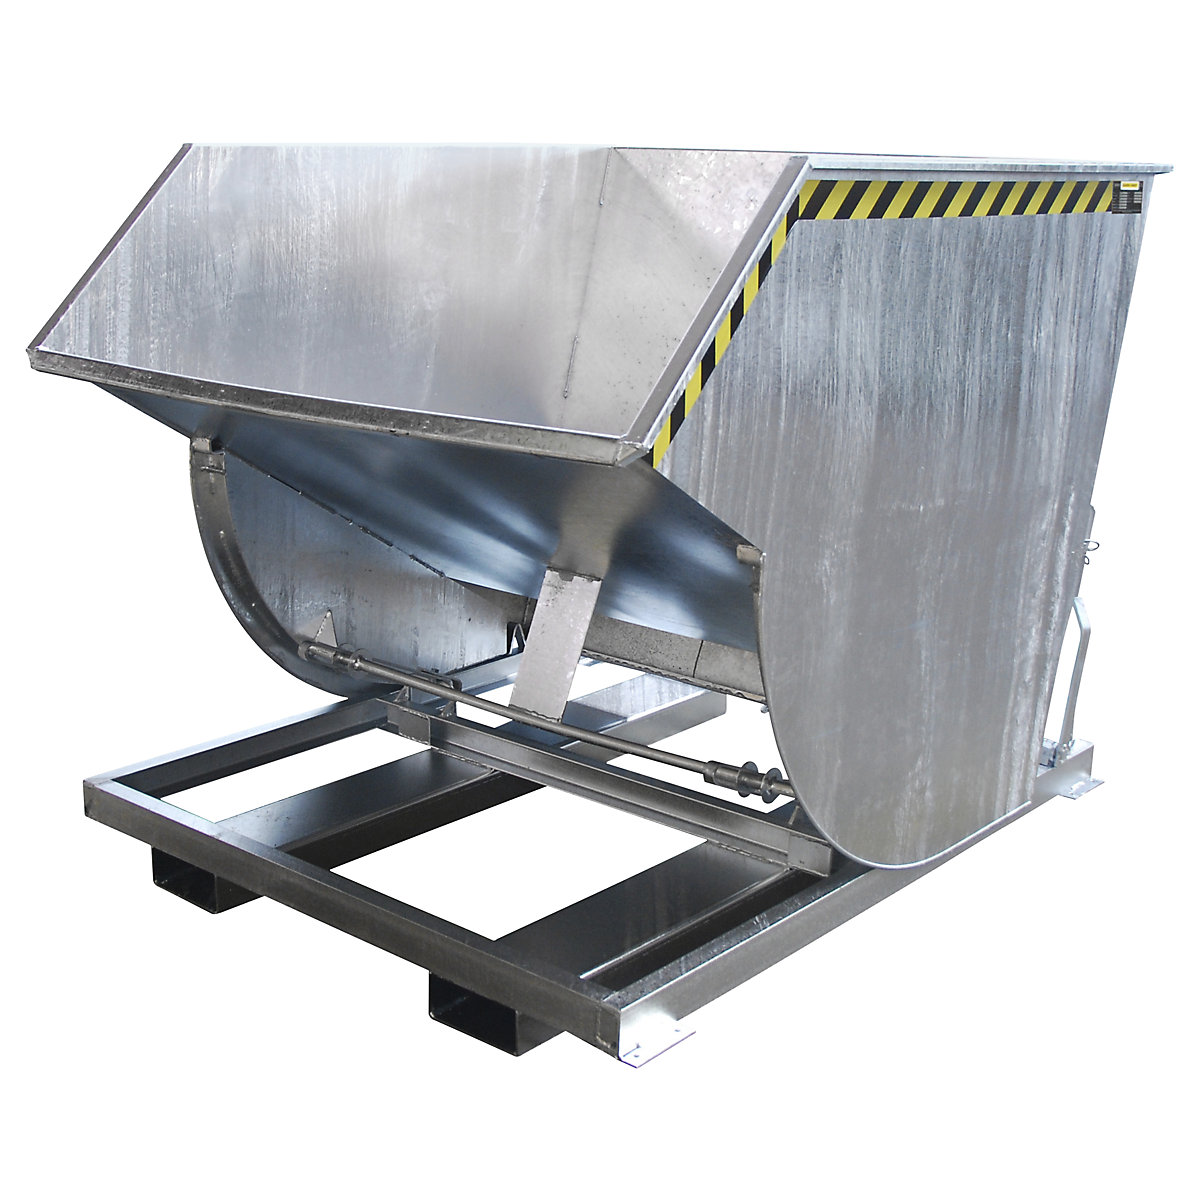 Tilting skip, narrow version – eurokraft pro, capacity 2.0 m³, max. load 3000 kg, hot dip galvanised in accordance with EN ISO 1461-9